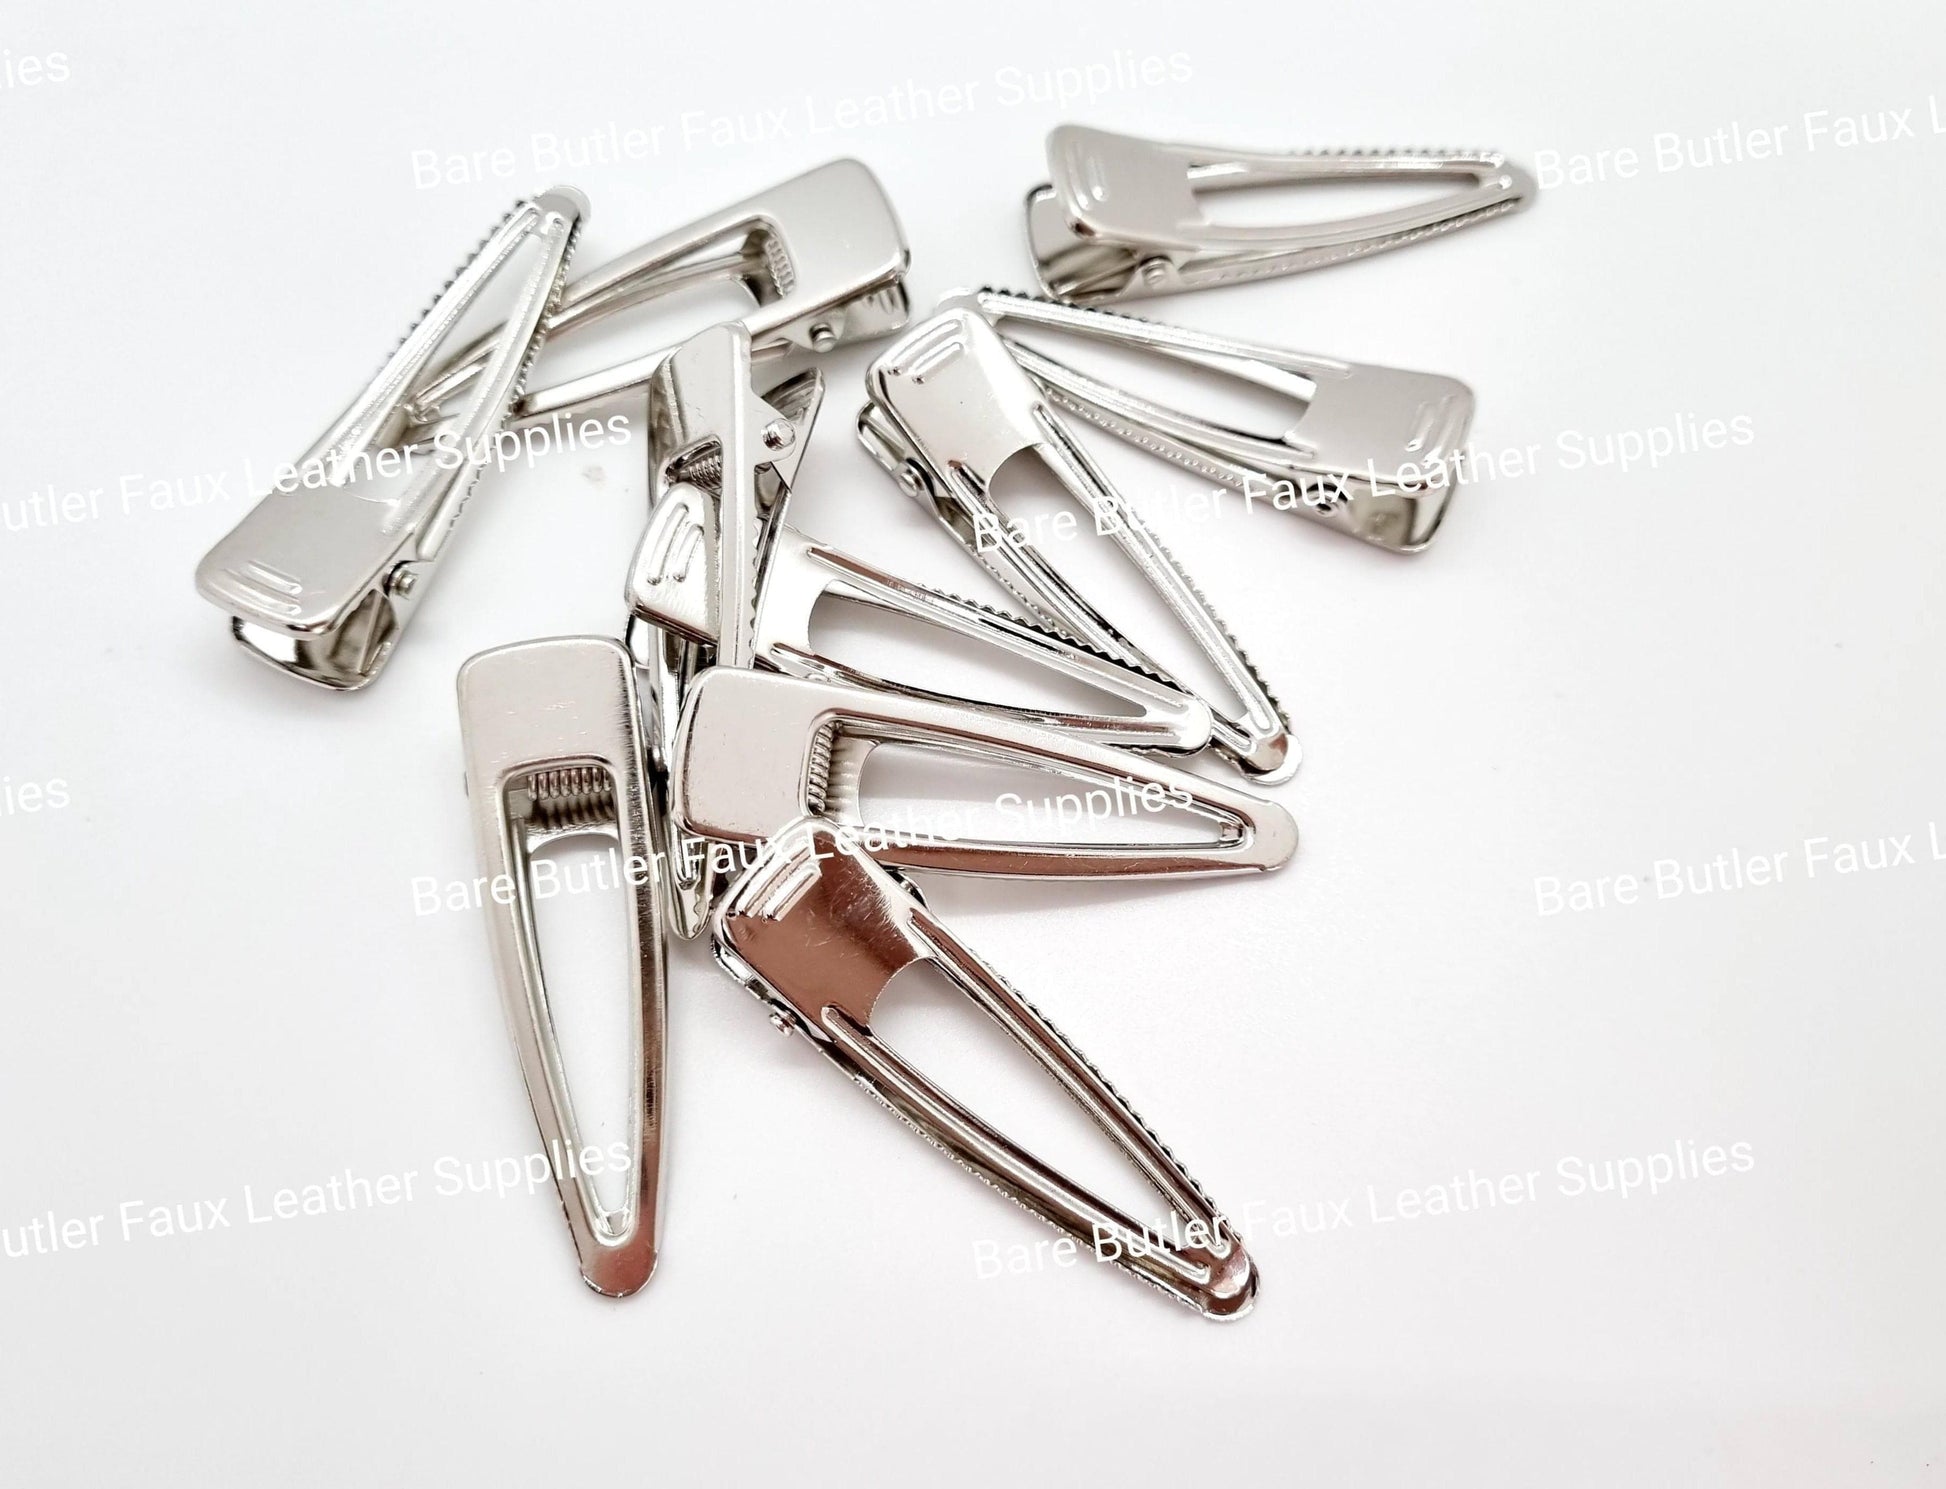 Barrette Clips Triangular 10 Pack - Accessories, Barrette, Clip, Hair, Hair clips - Bare Butler Faux Leather Supplies 